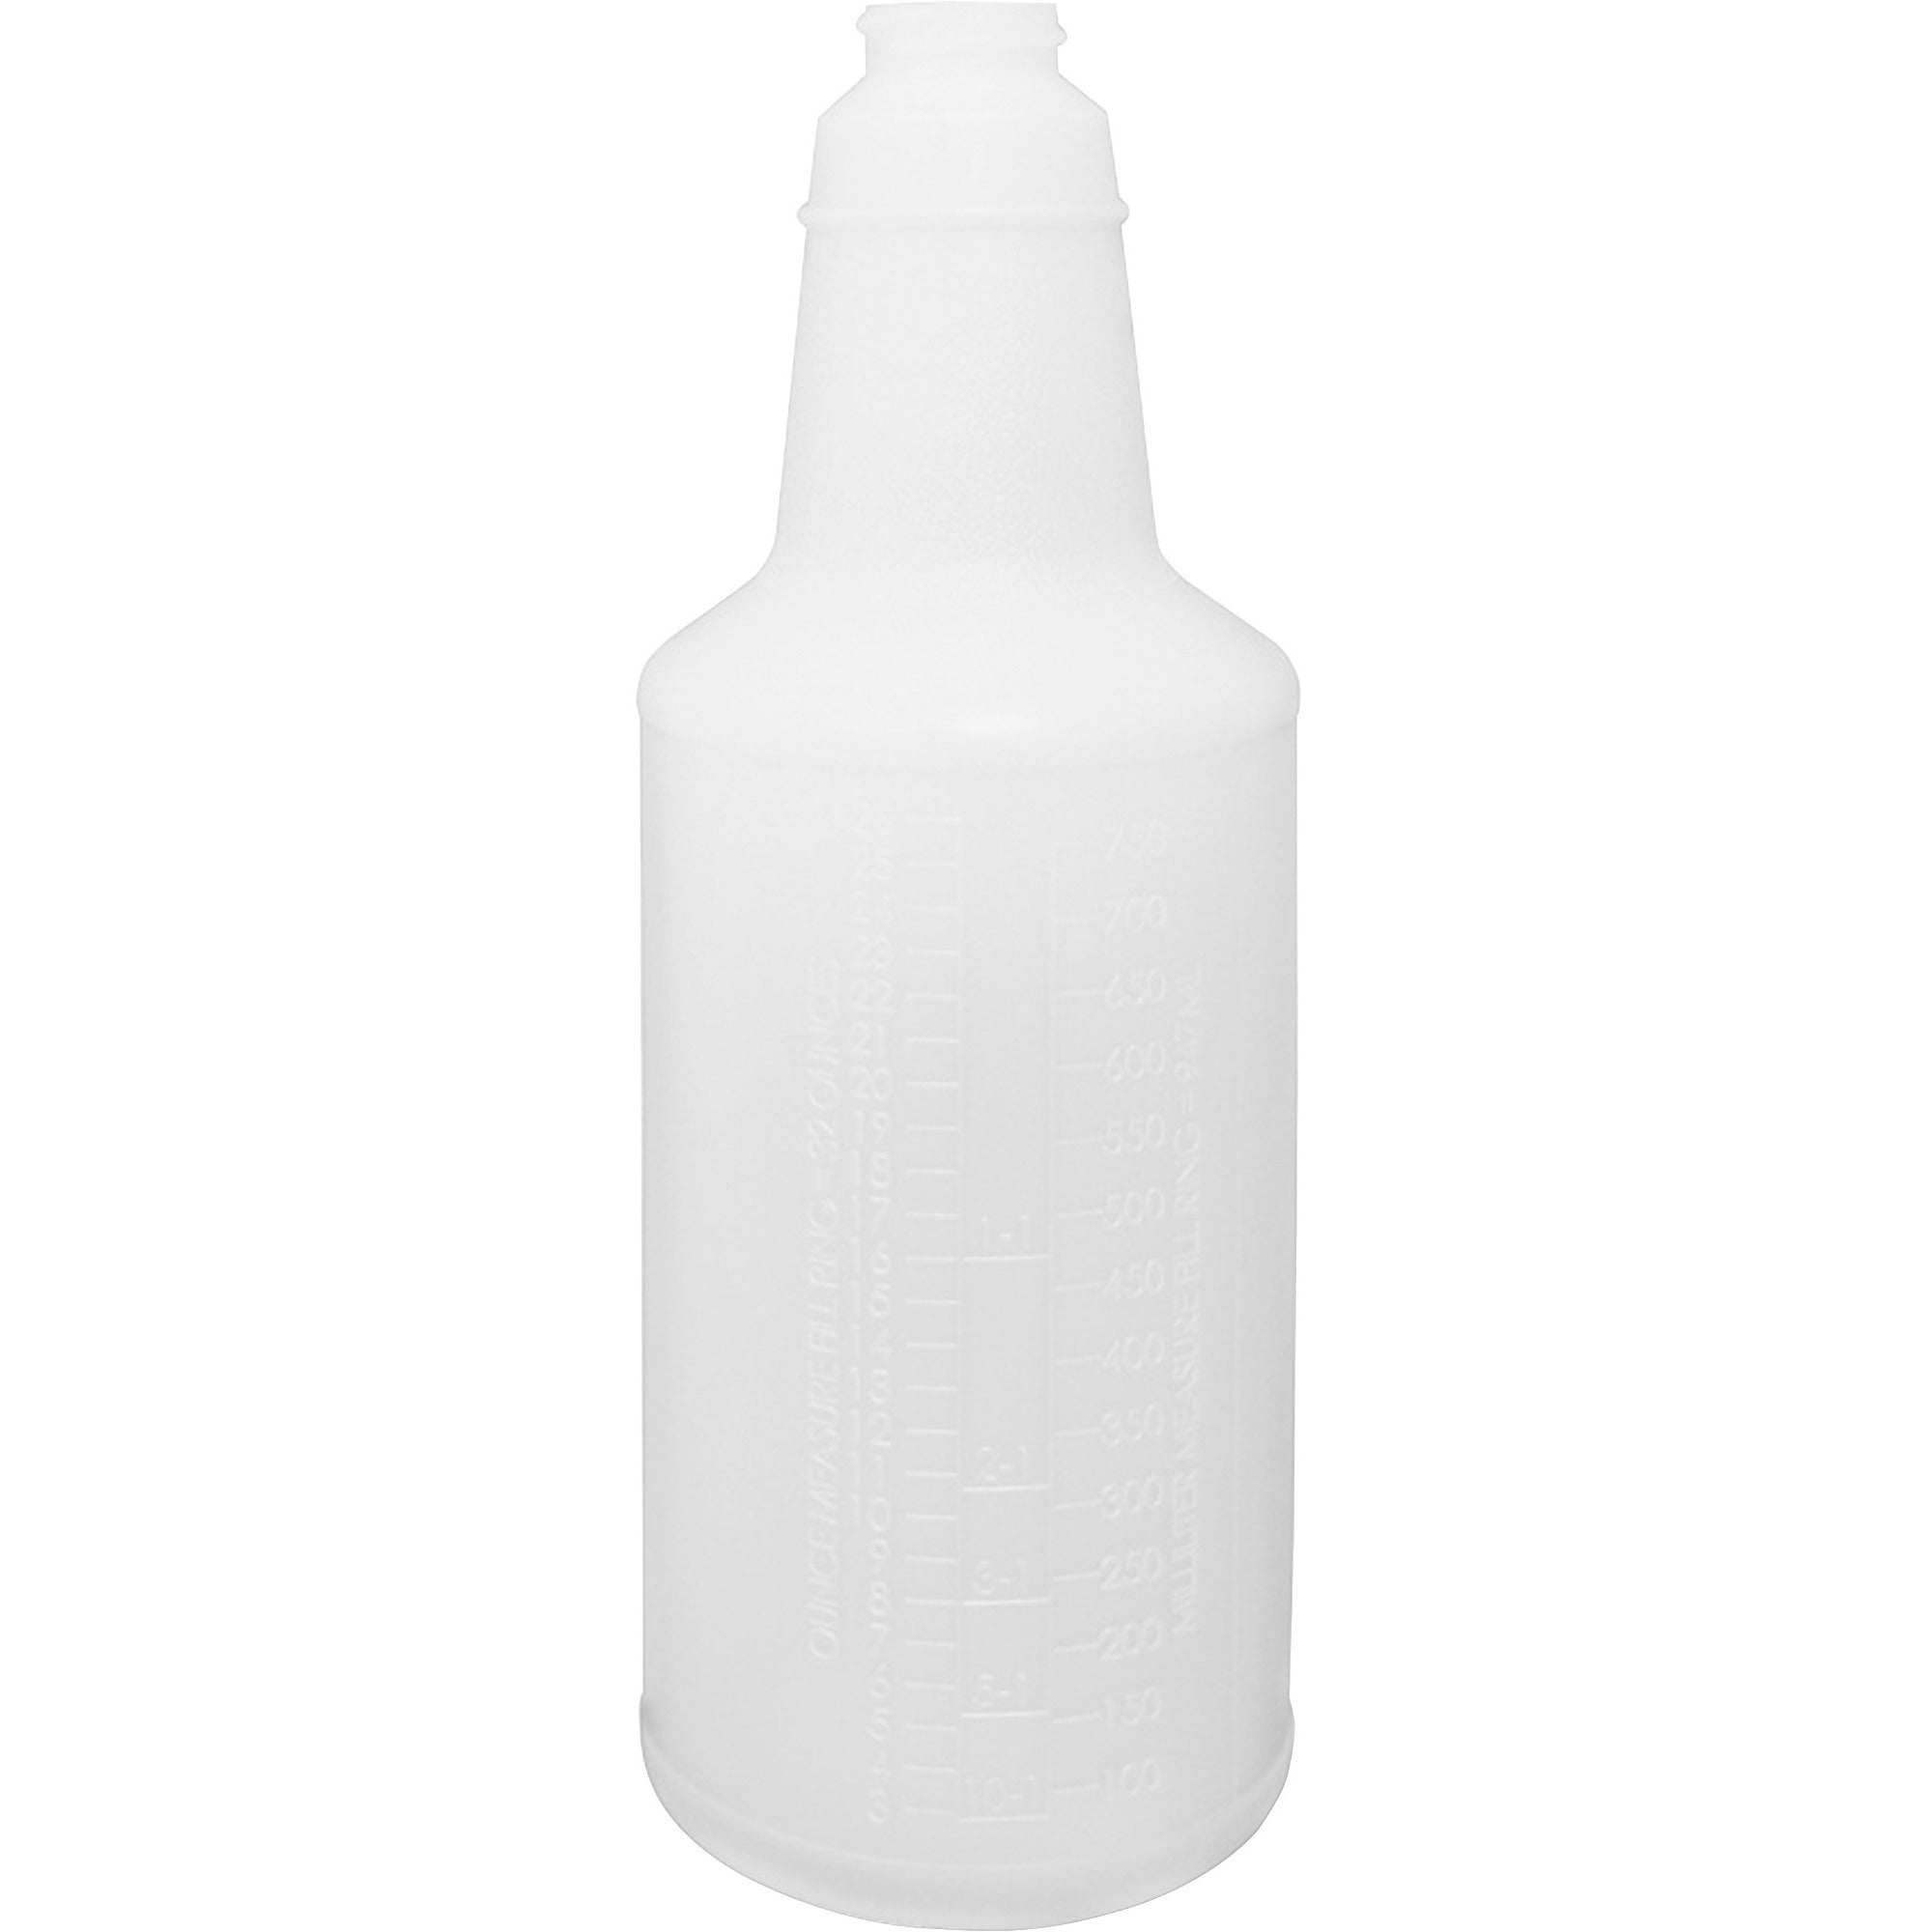 Impact Plastic Cleaner Bottles - 1 Each - Natural - Plastic - 